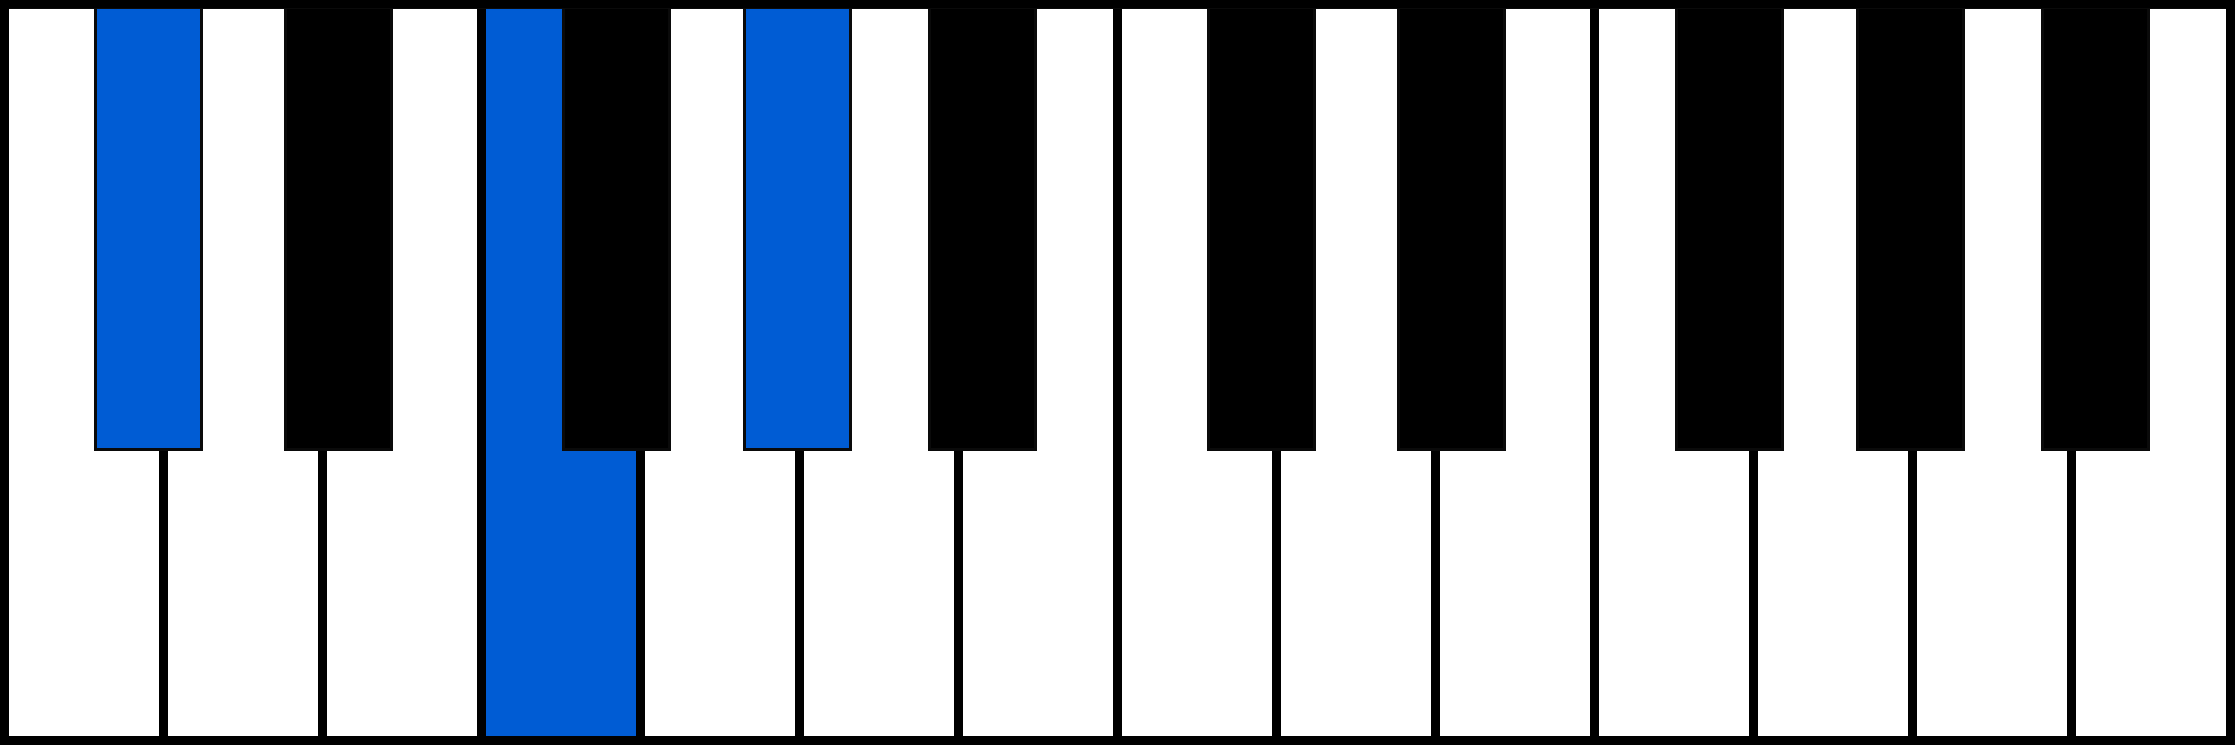 C#maj piano chord fingering